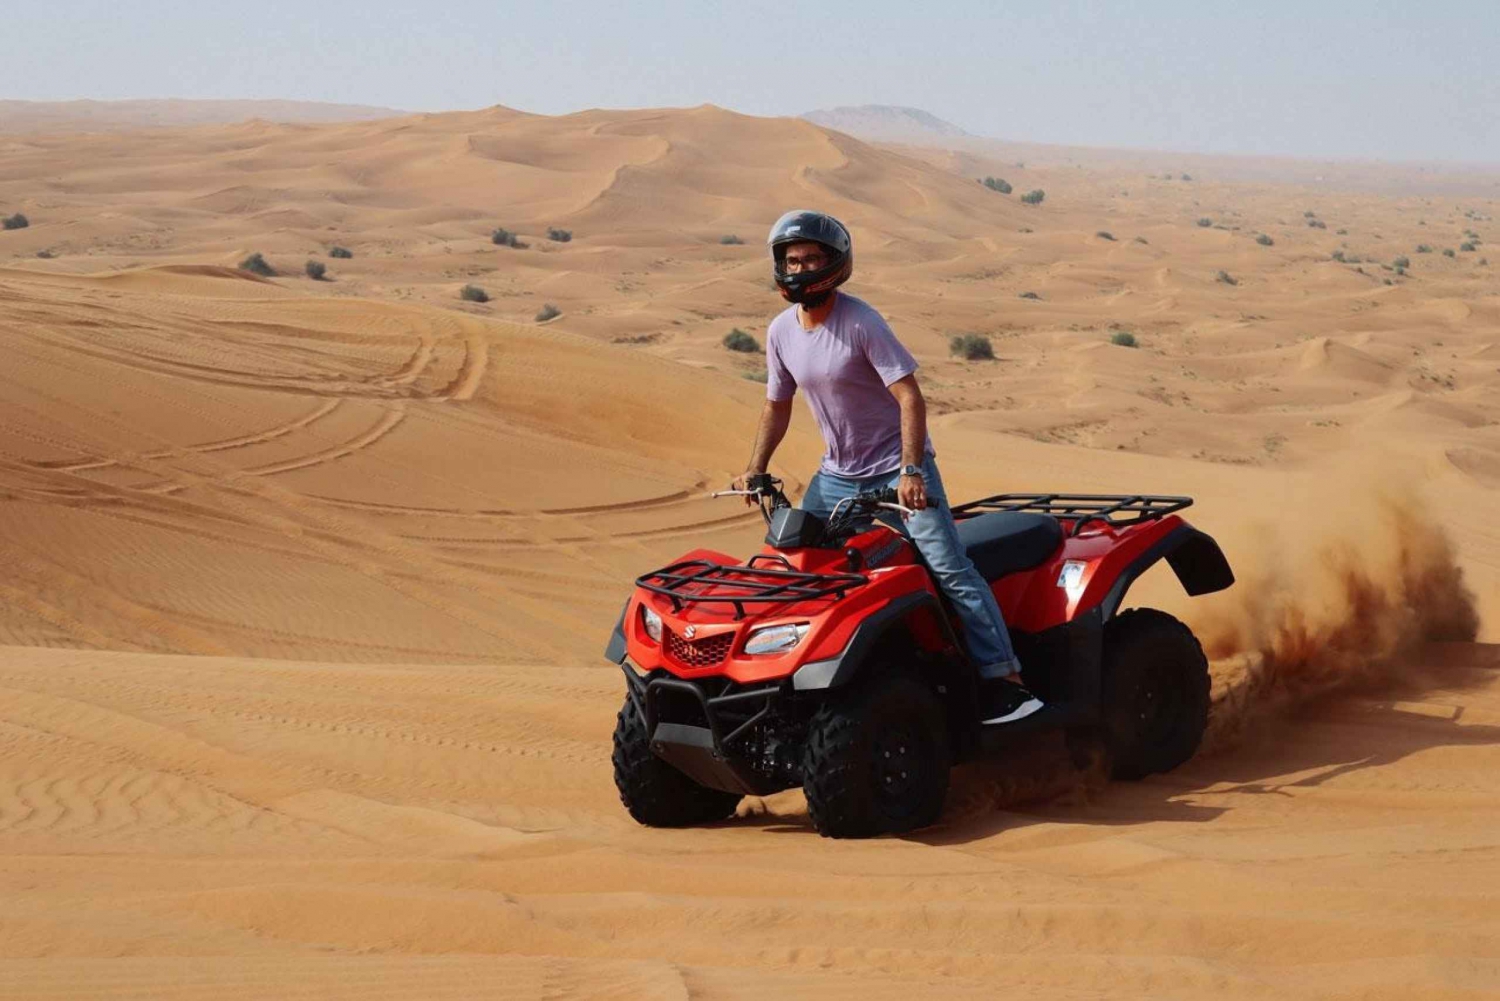 Dubai: Firehjulssafari, kameler og leirskole med grillmiddag